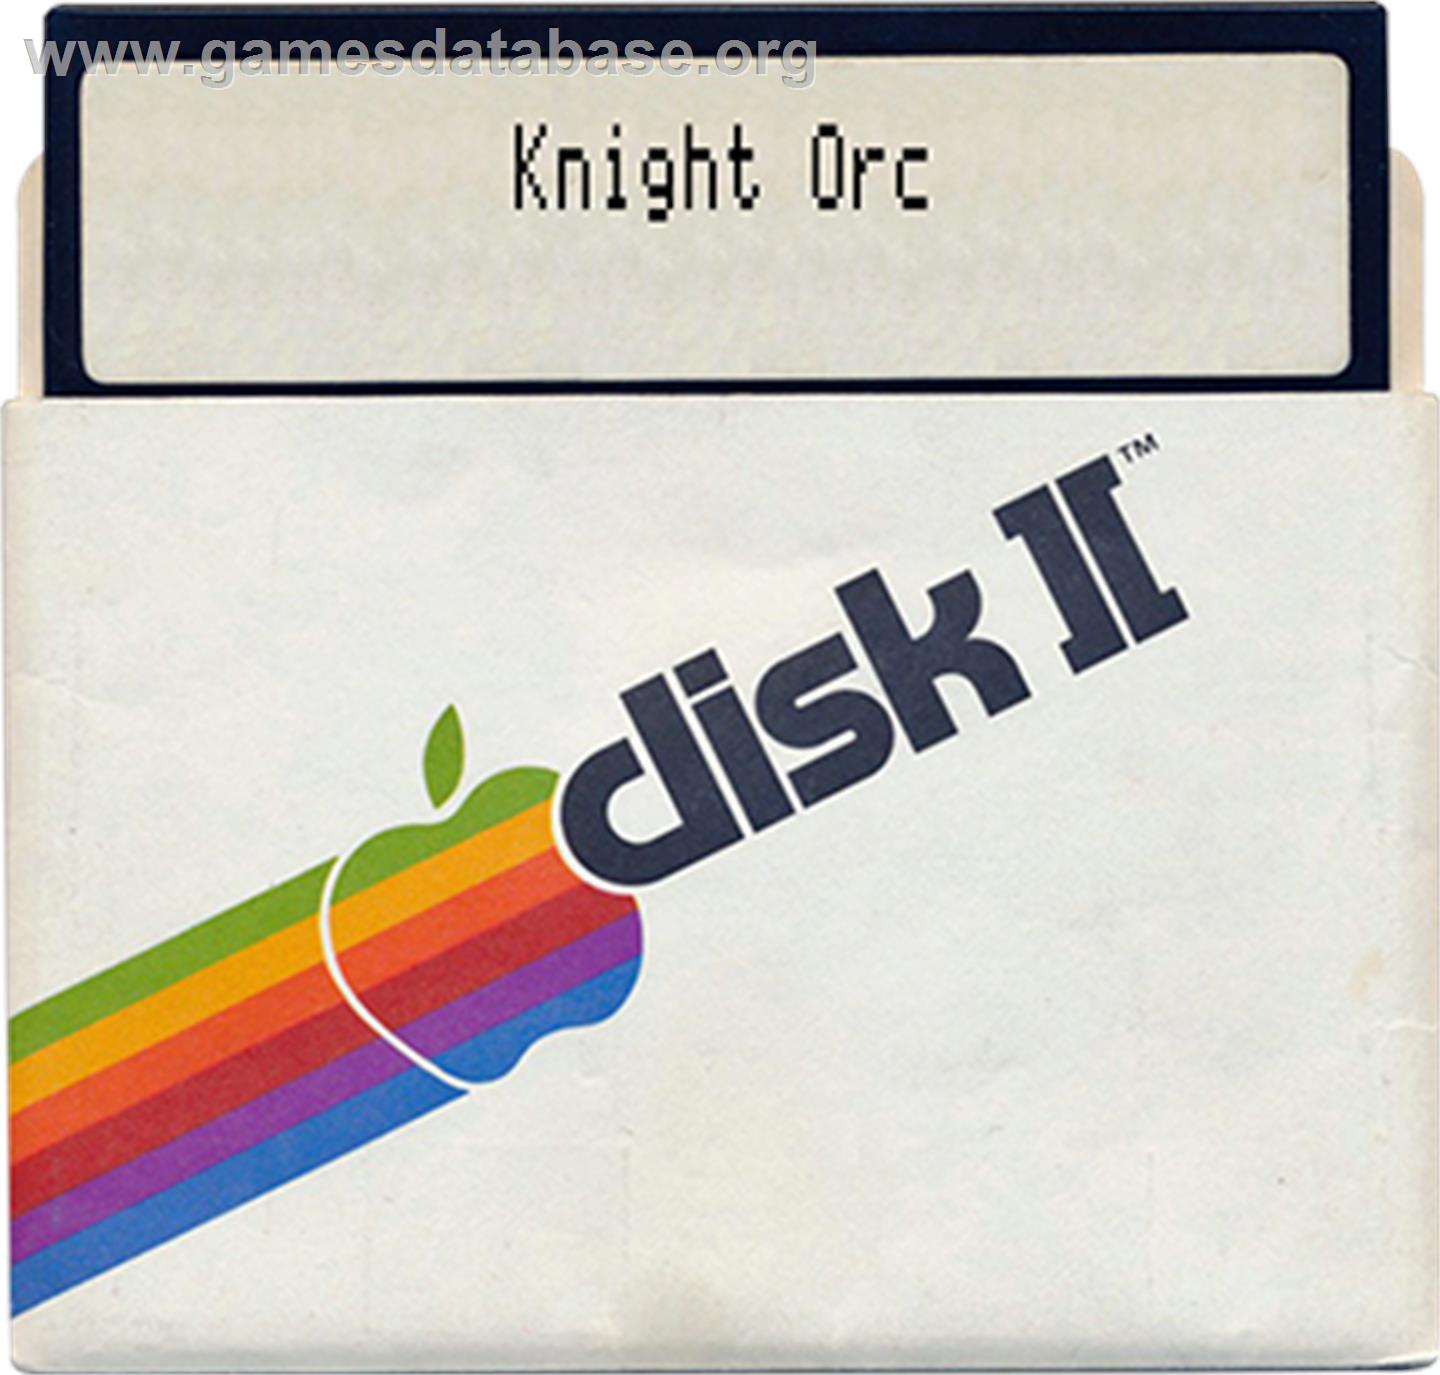 Knight Orc - Apple II - Artwork - Disc